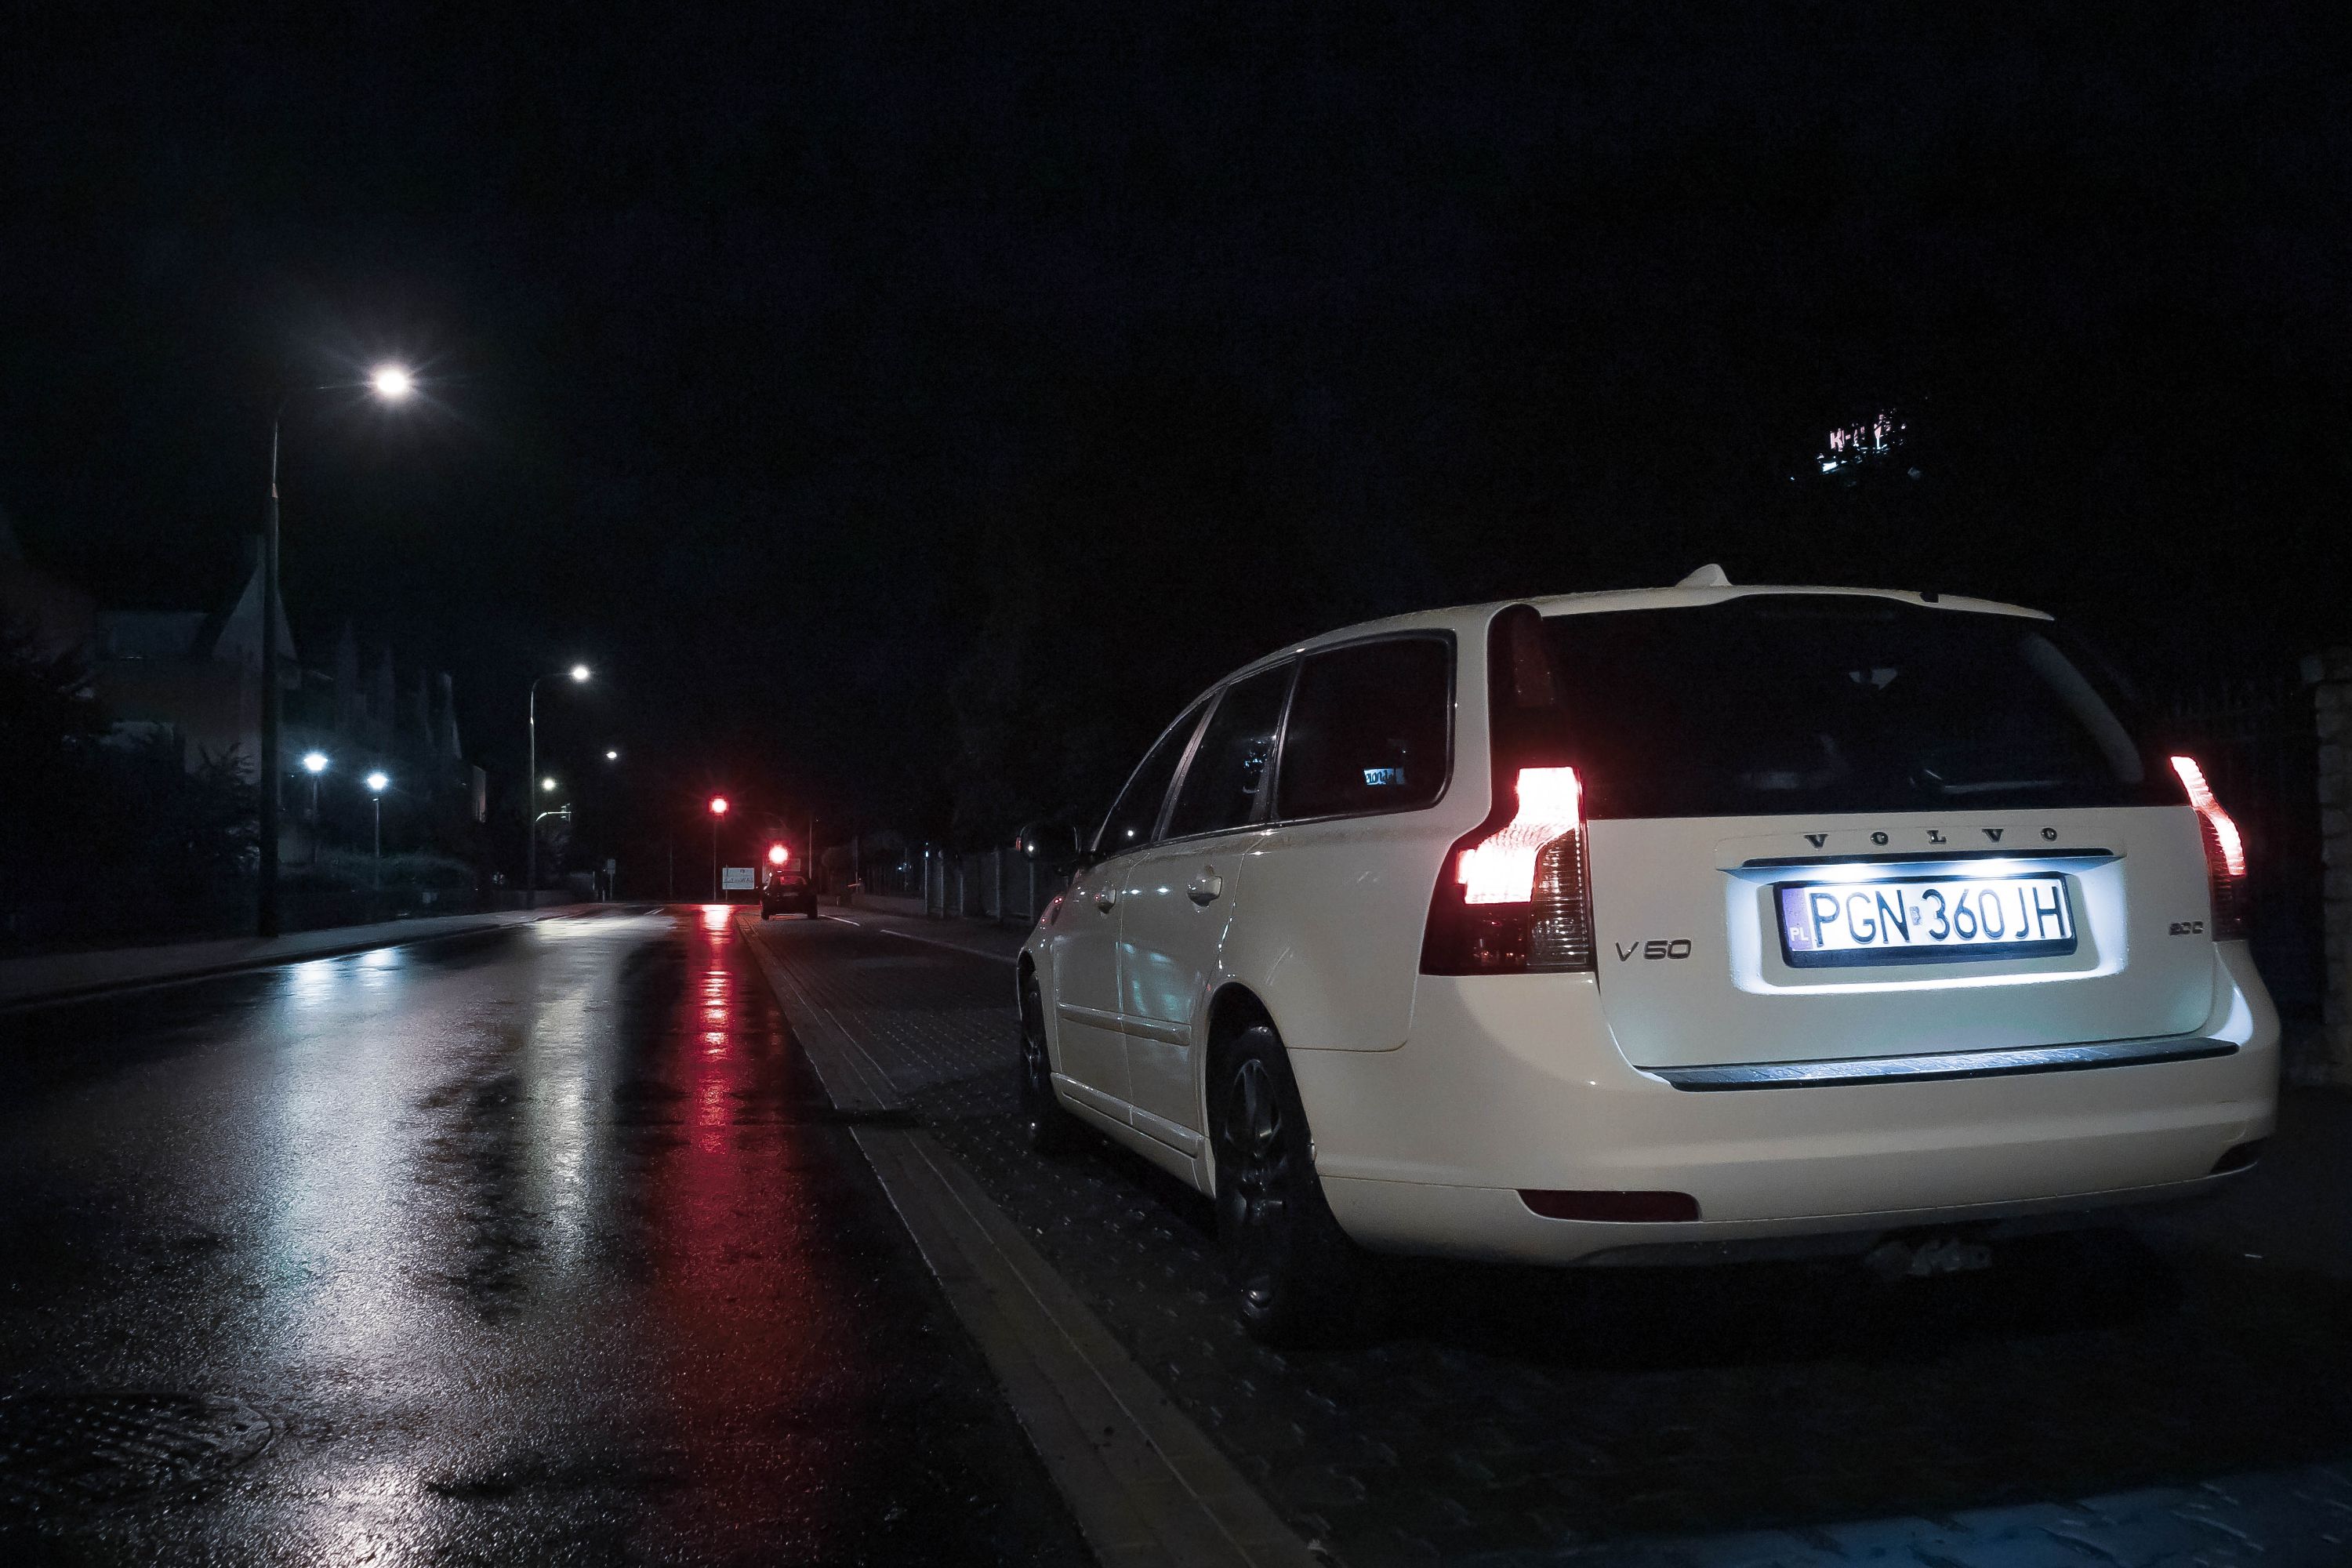 Volvo at night